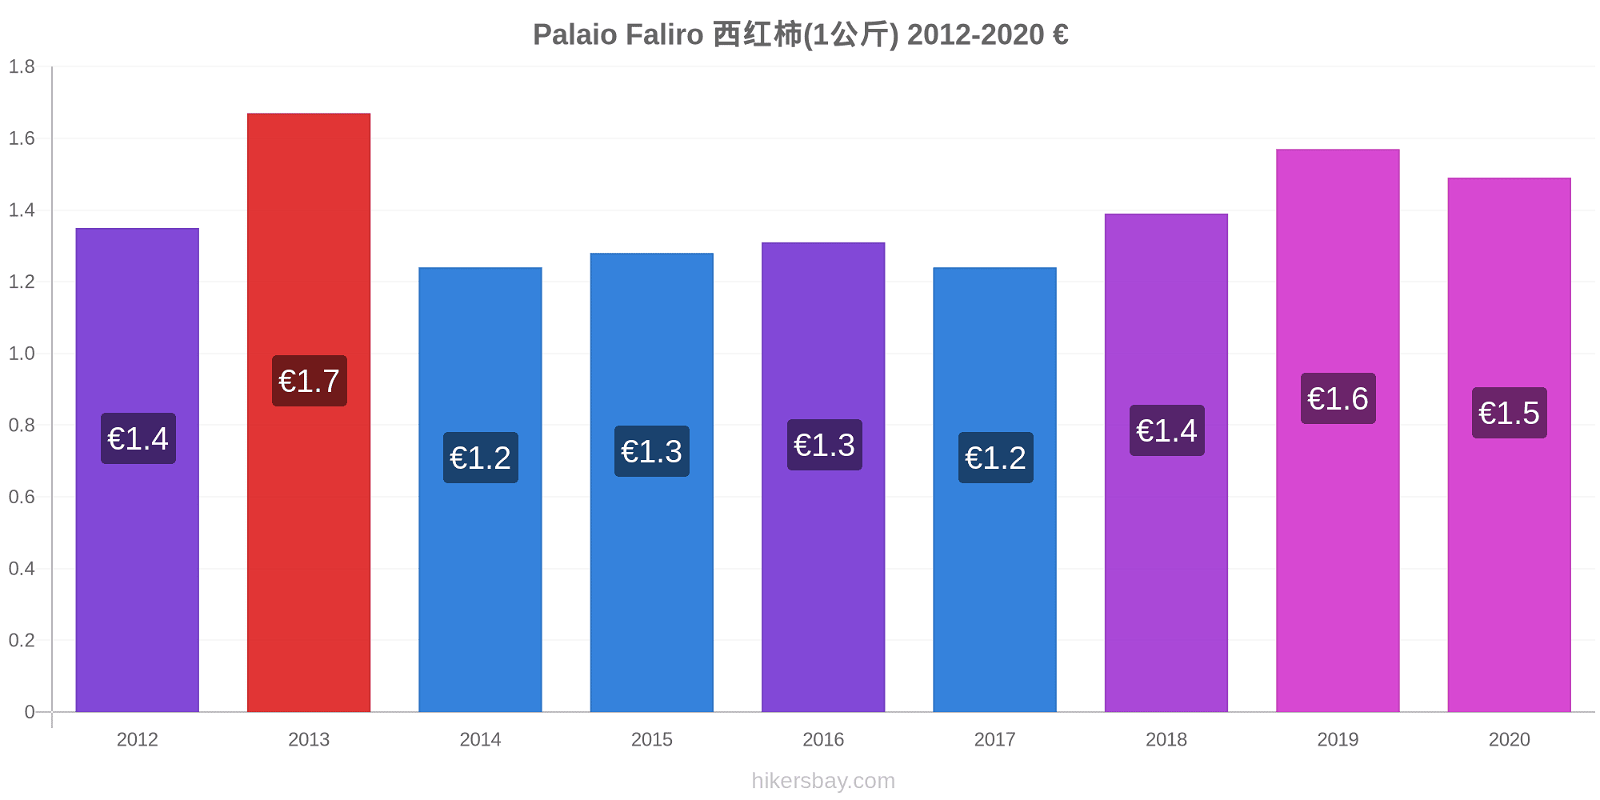 Palaio Faliro 价格变化 番茄 （1 公斤） hikersbay.com